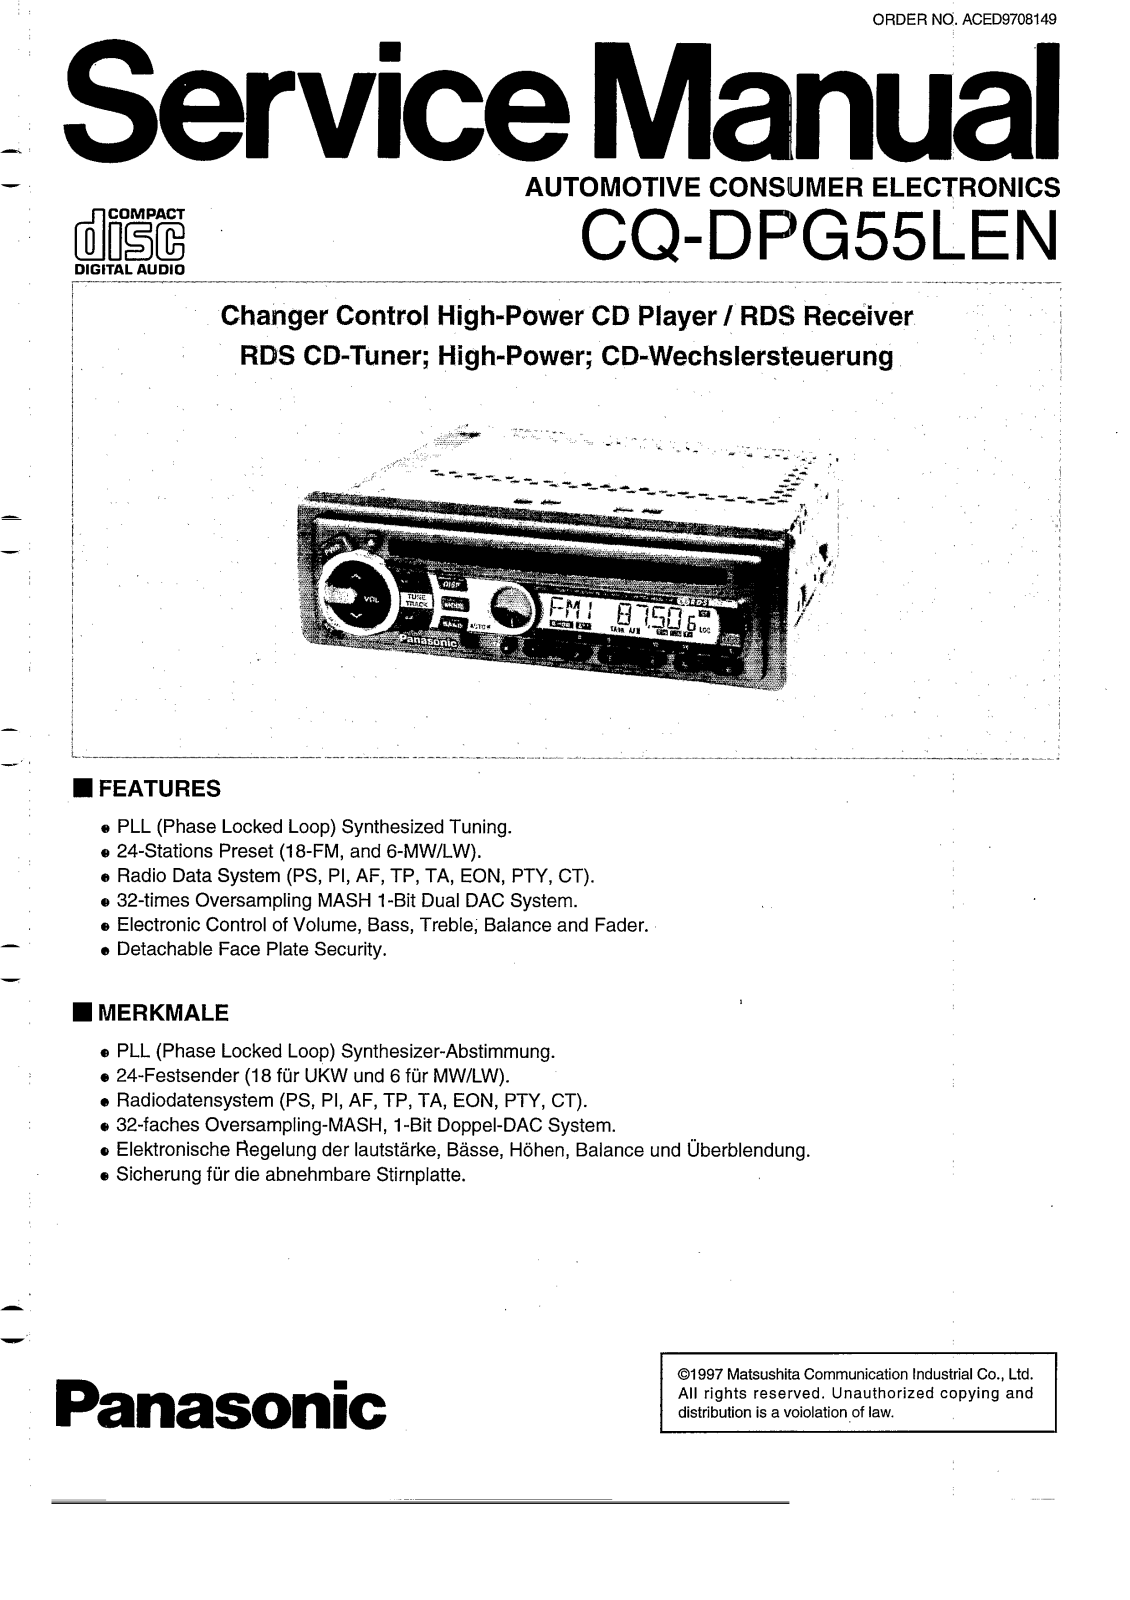 Panasonic CQ-DPG55LE Service Manual